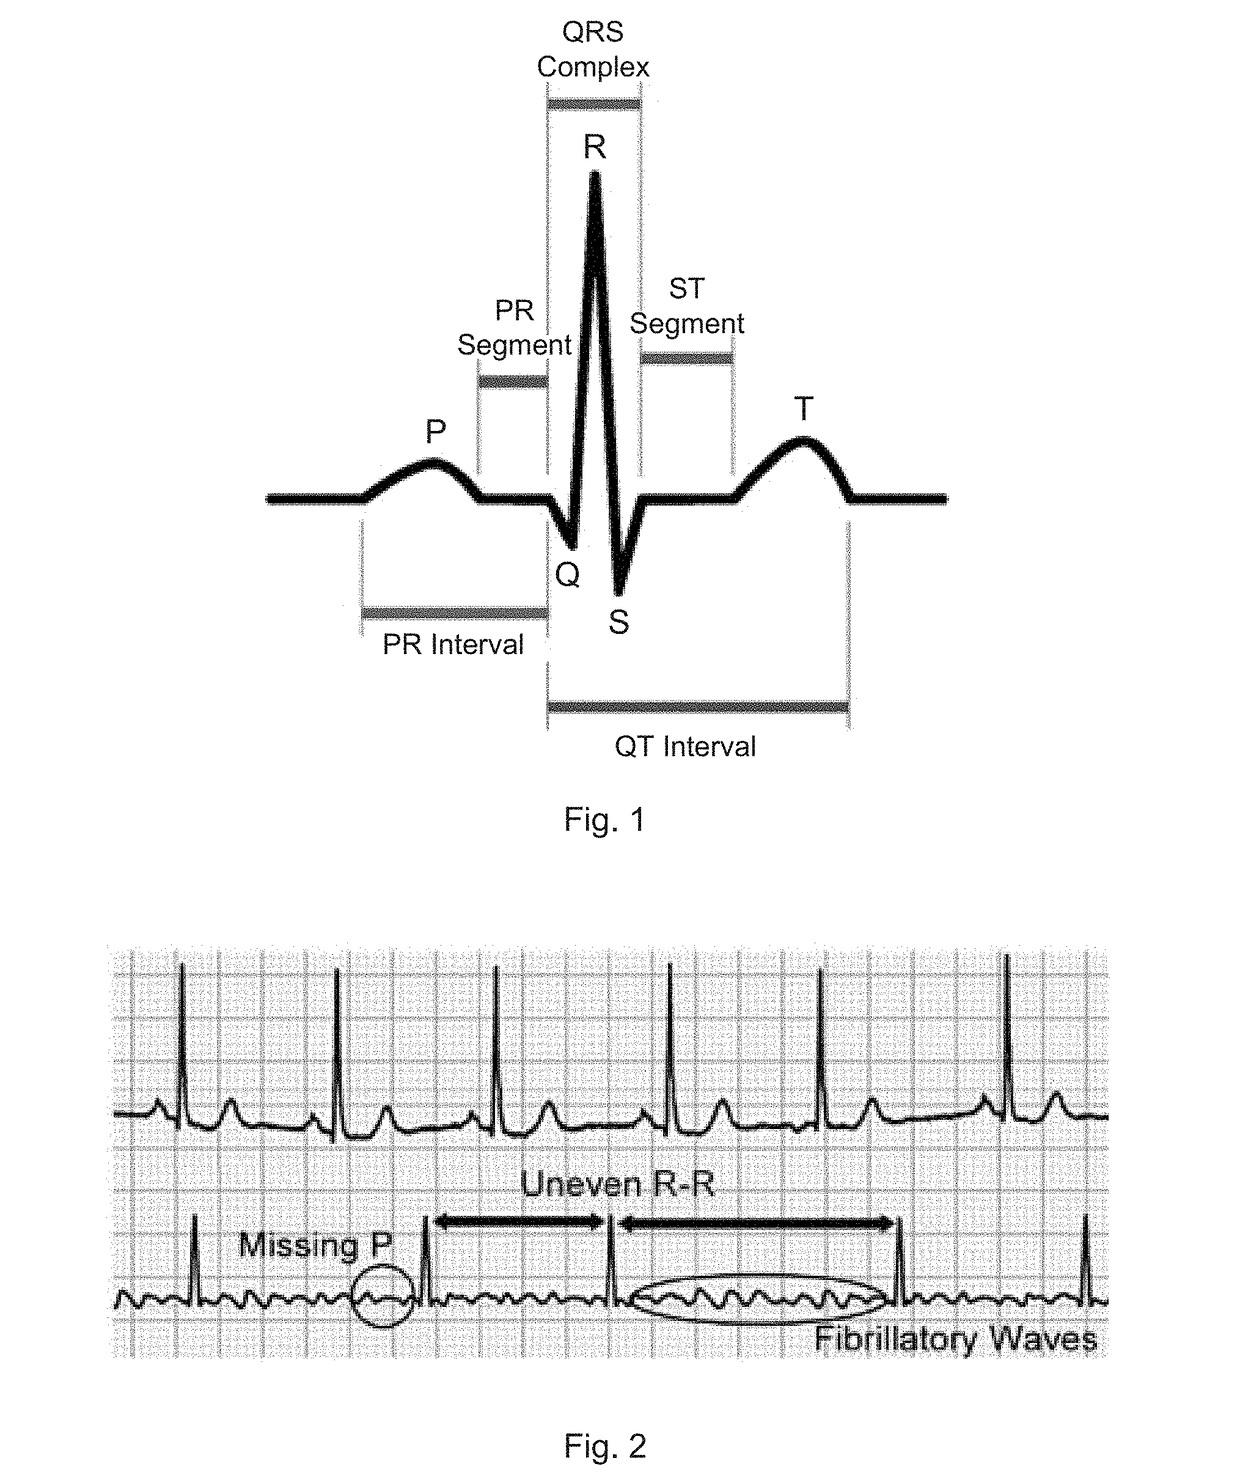 Method of detecting abnormalities in ECG signals